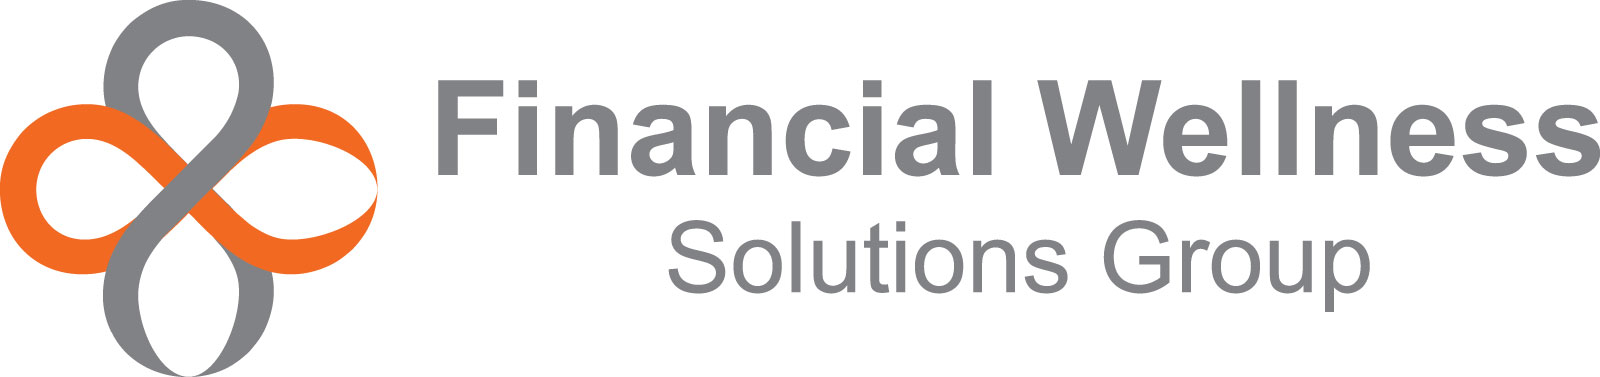 Financial Wellness Solutions Group